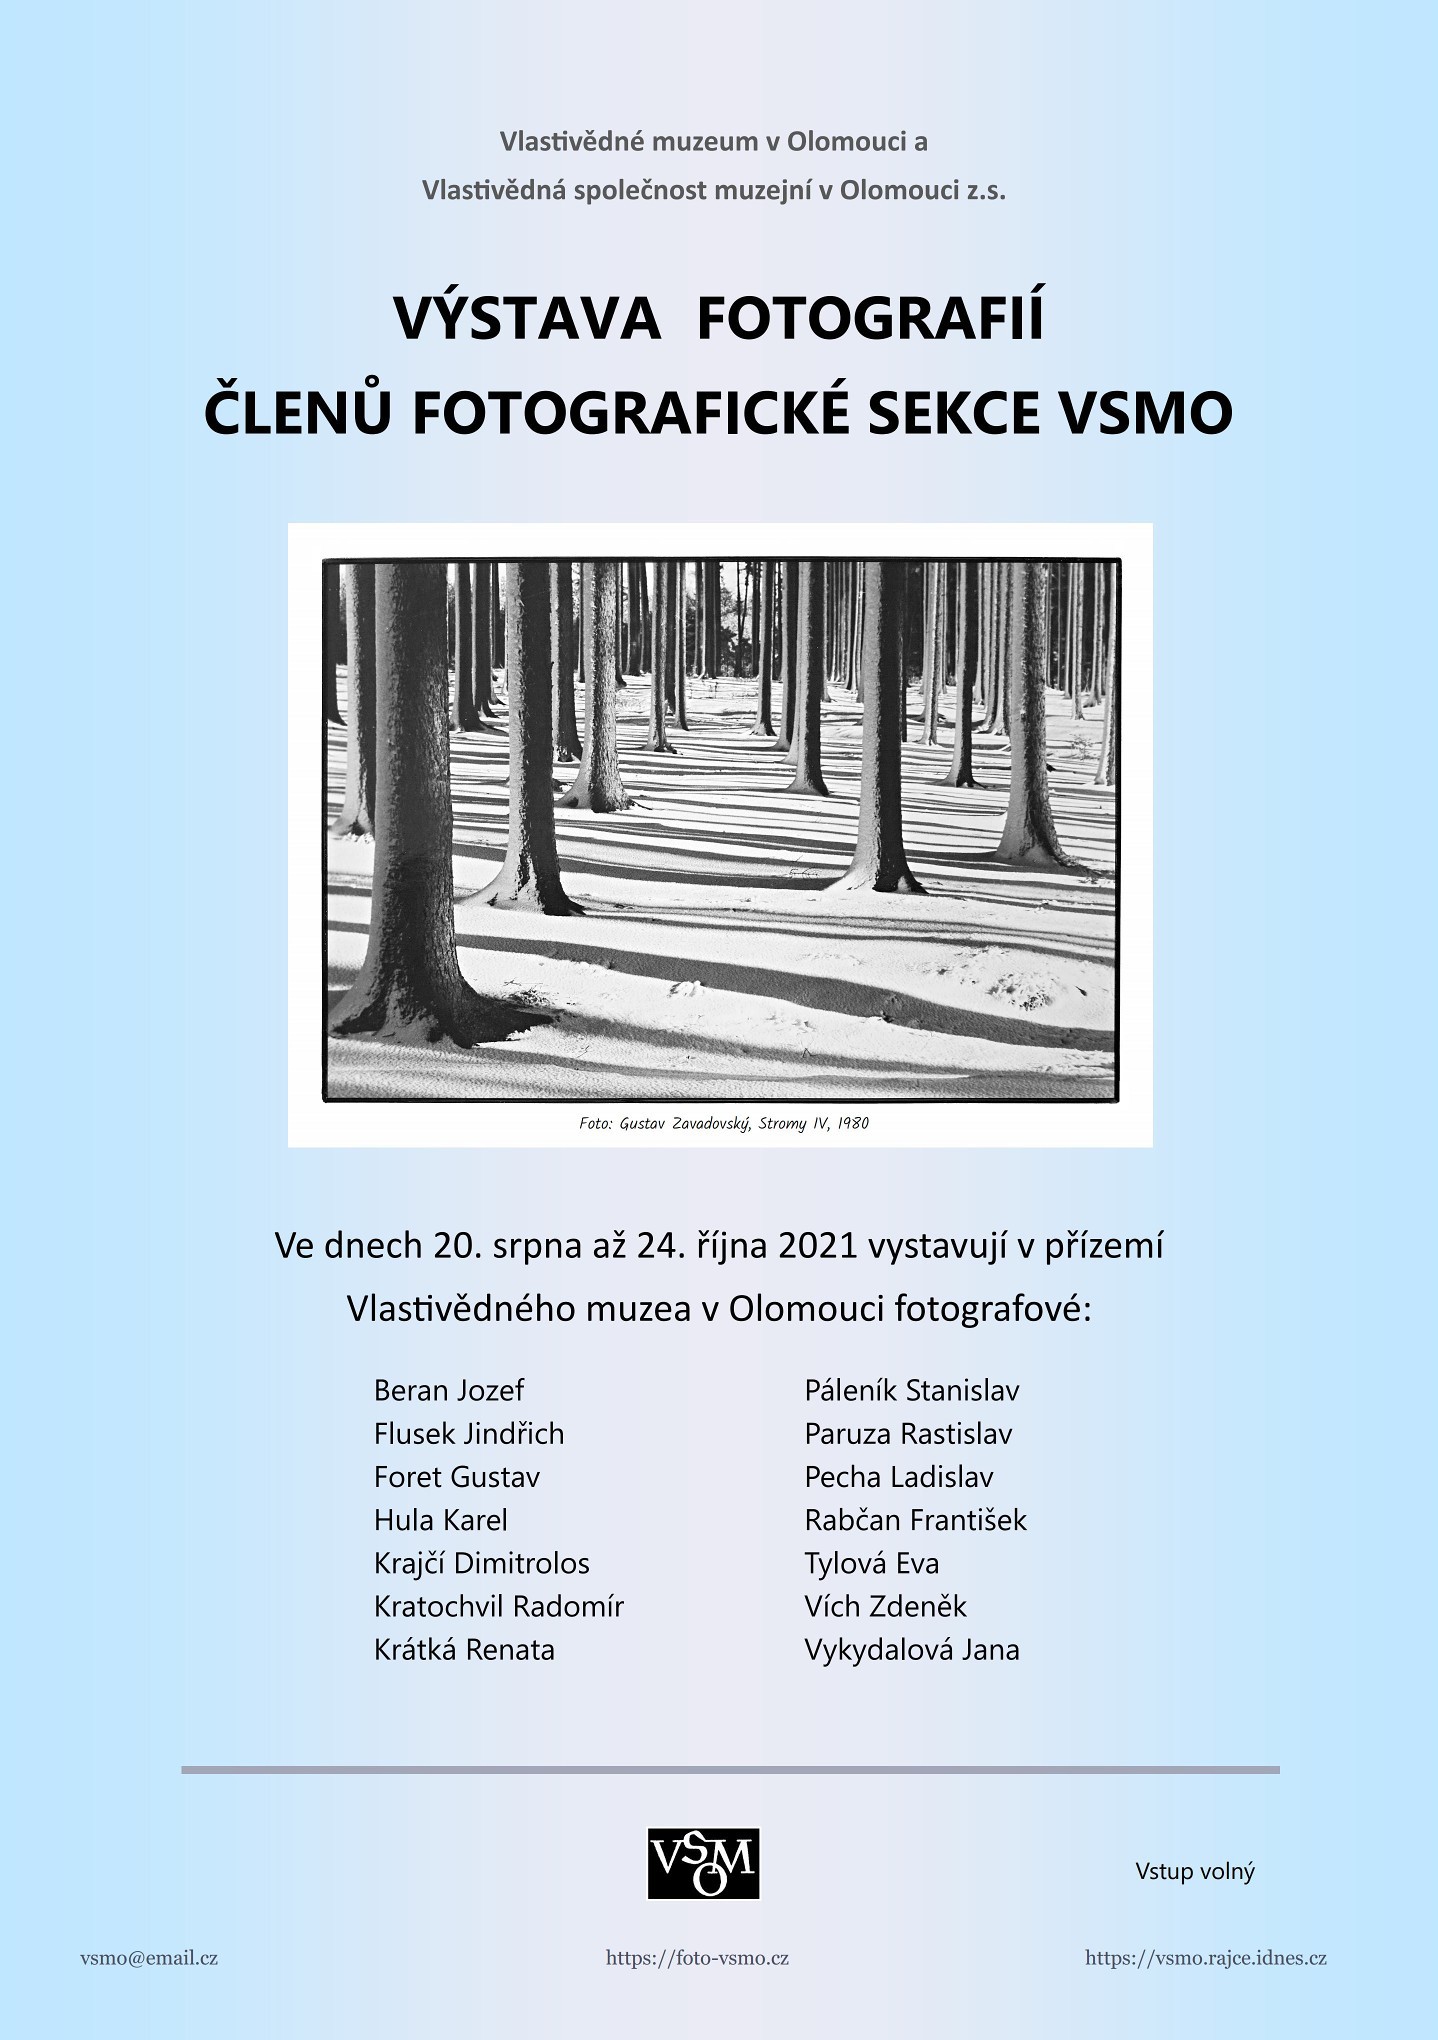 foto-vystava-fotosekce-vsmo-2021-v-muzeu-plakat2amodra1-finjpg_page1-red50.jpg